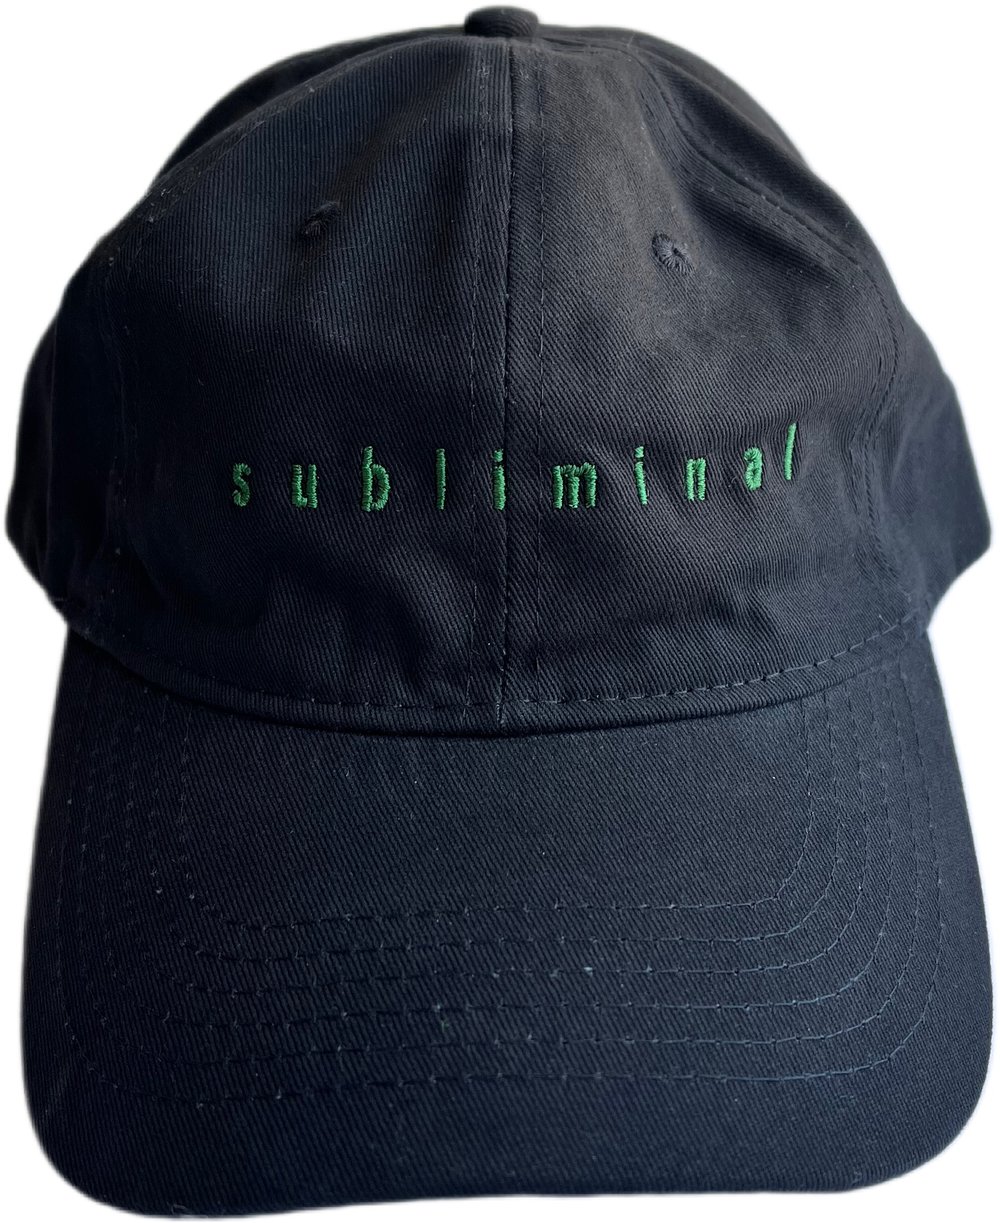 Image of Subliminal Hat